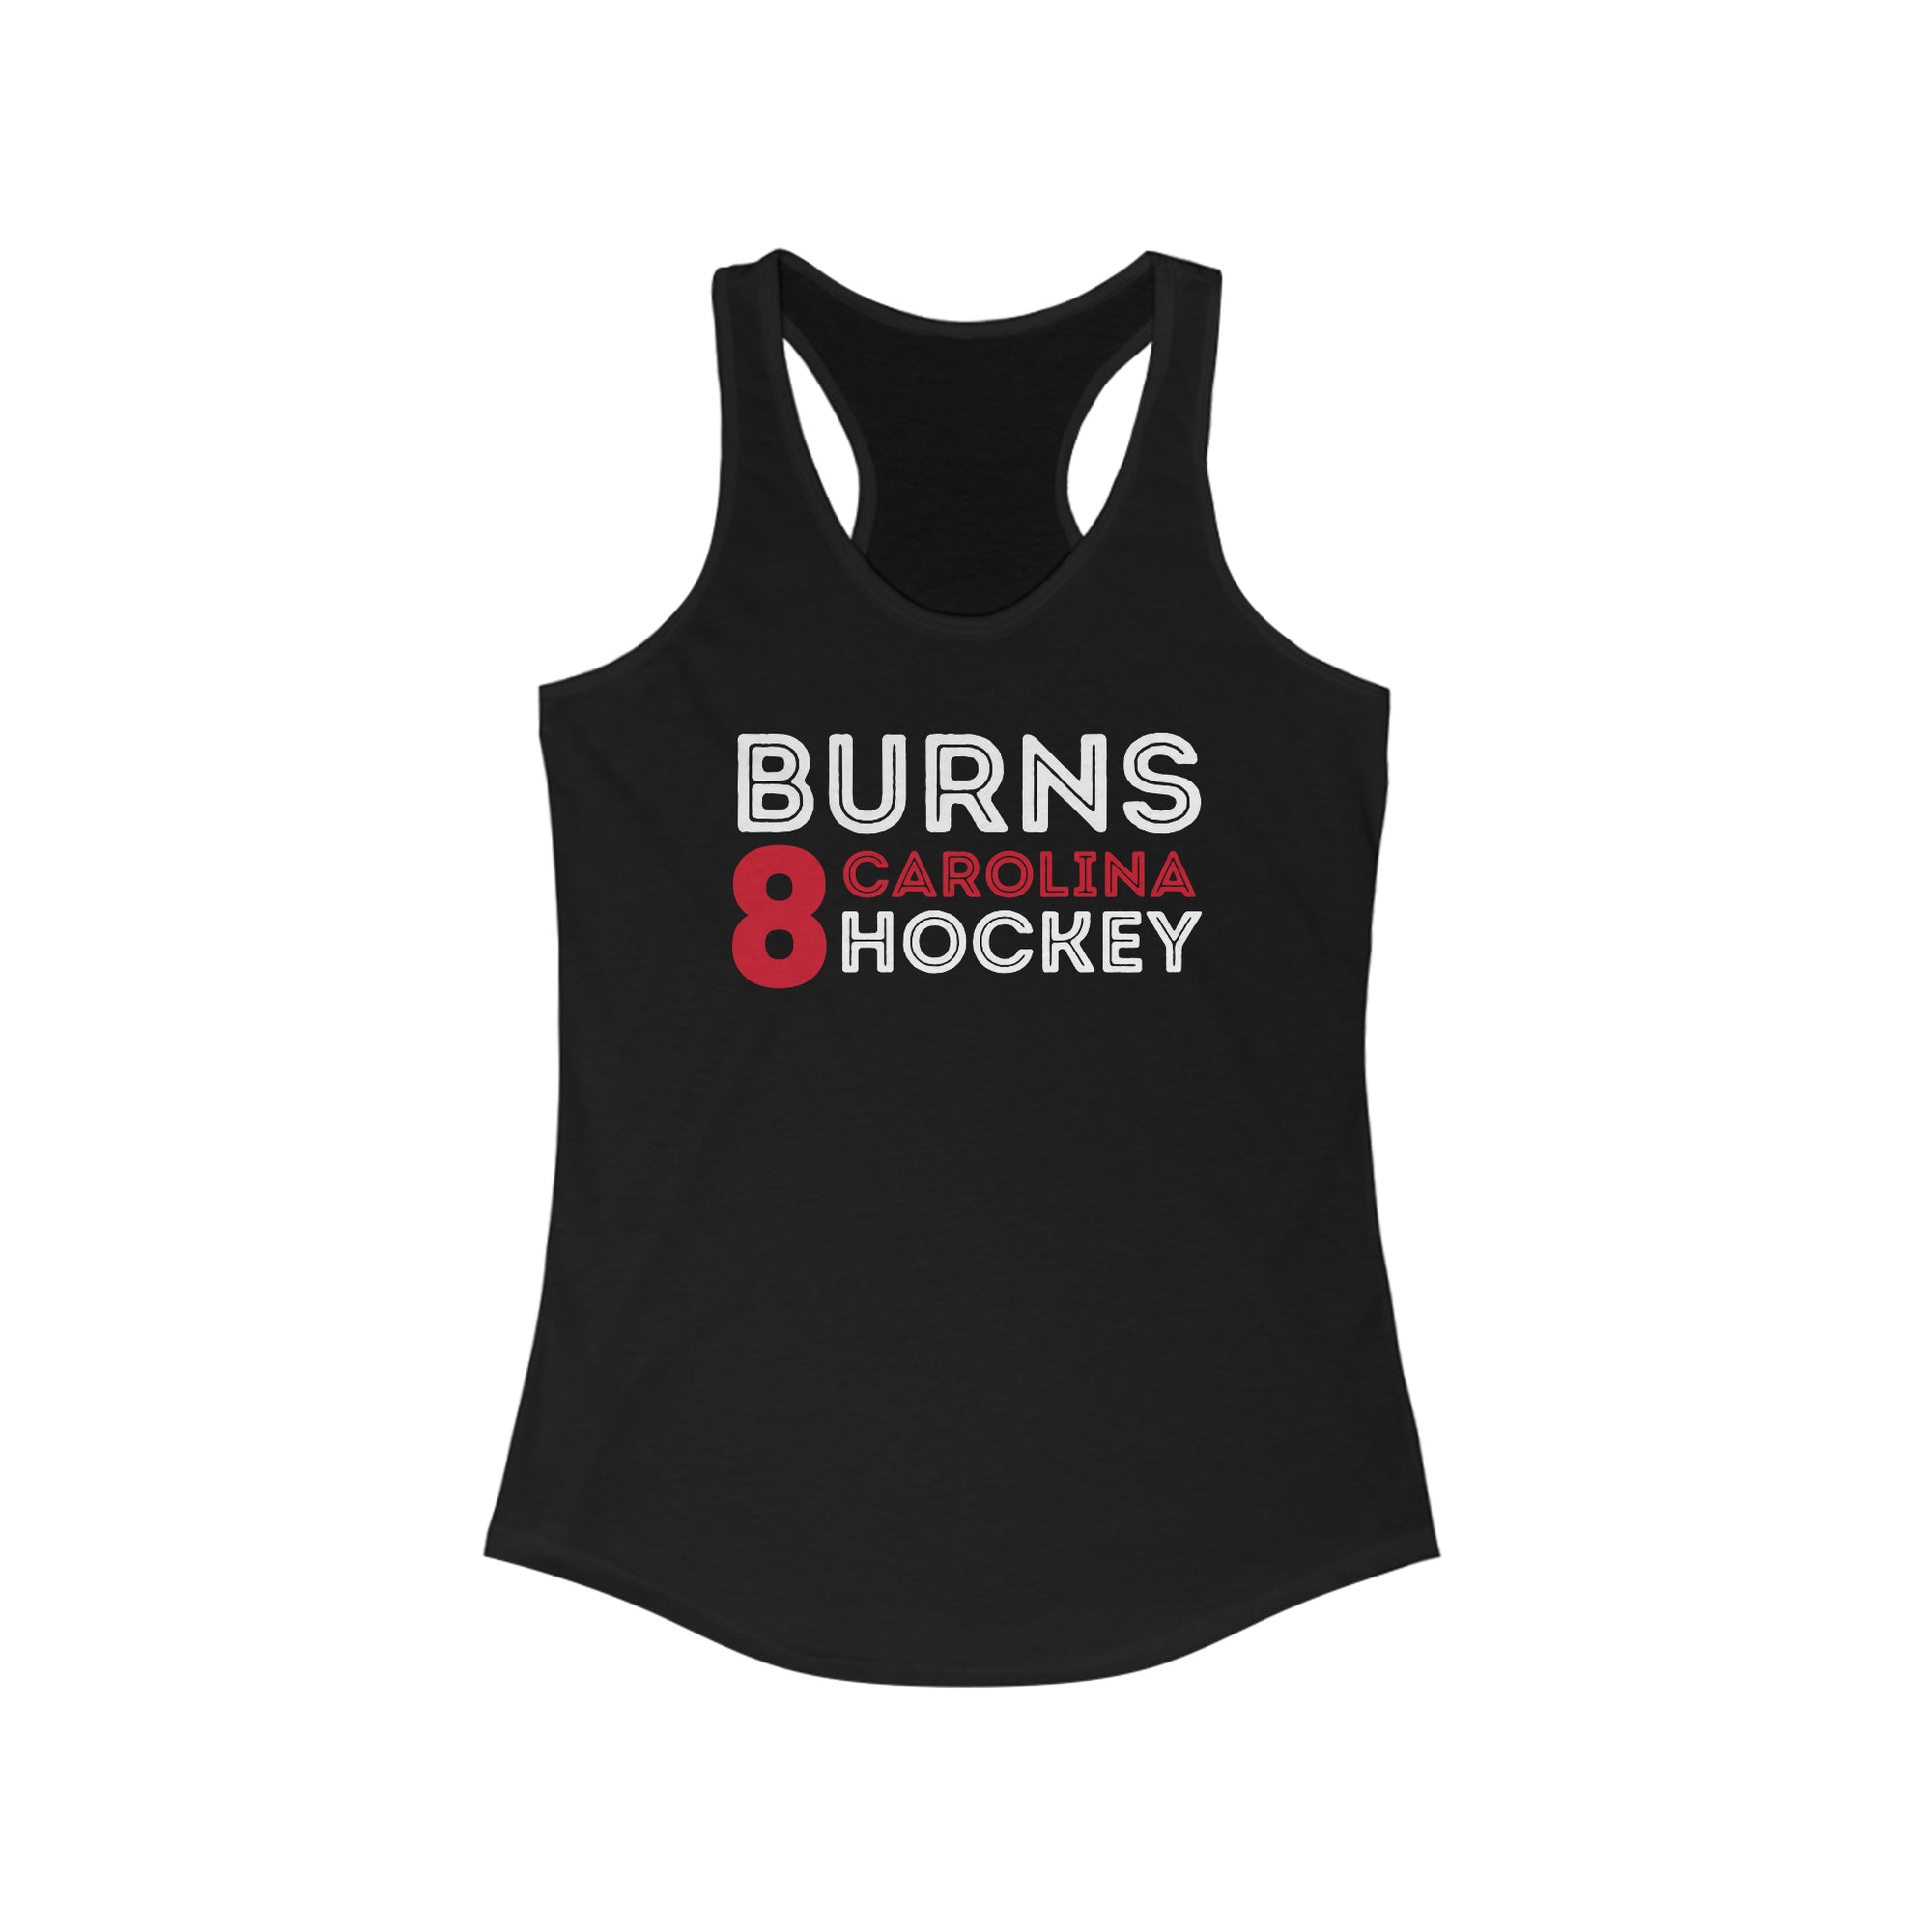 Burns 8 Carolina Hockey Grafitti Wall Design Women's Ideal Racerback Tank Top